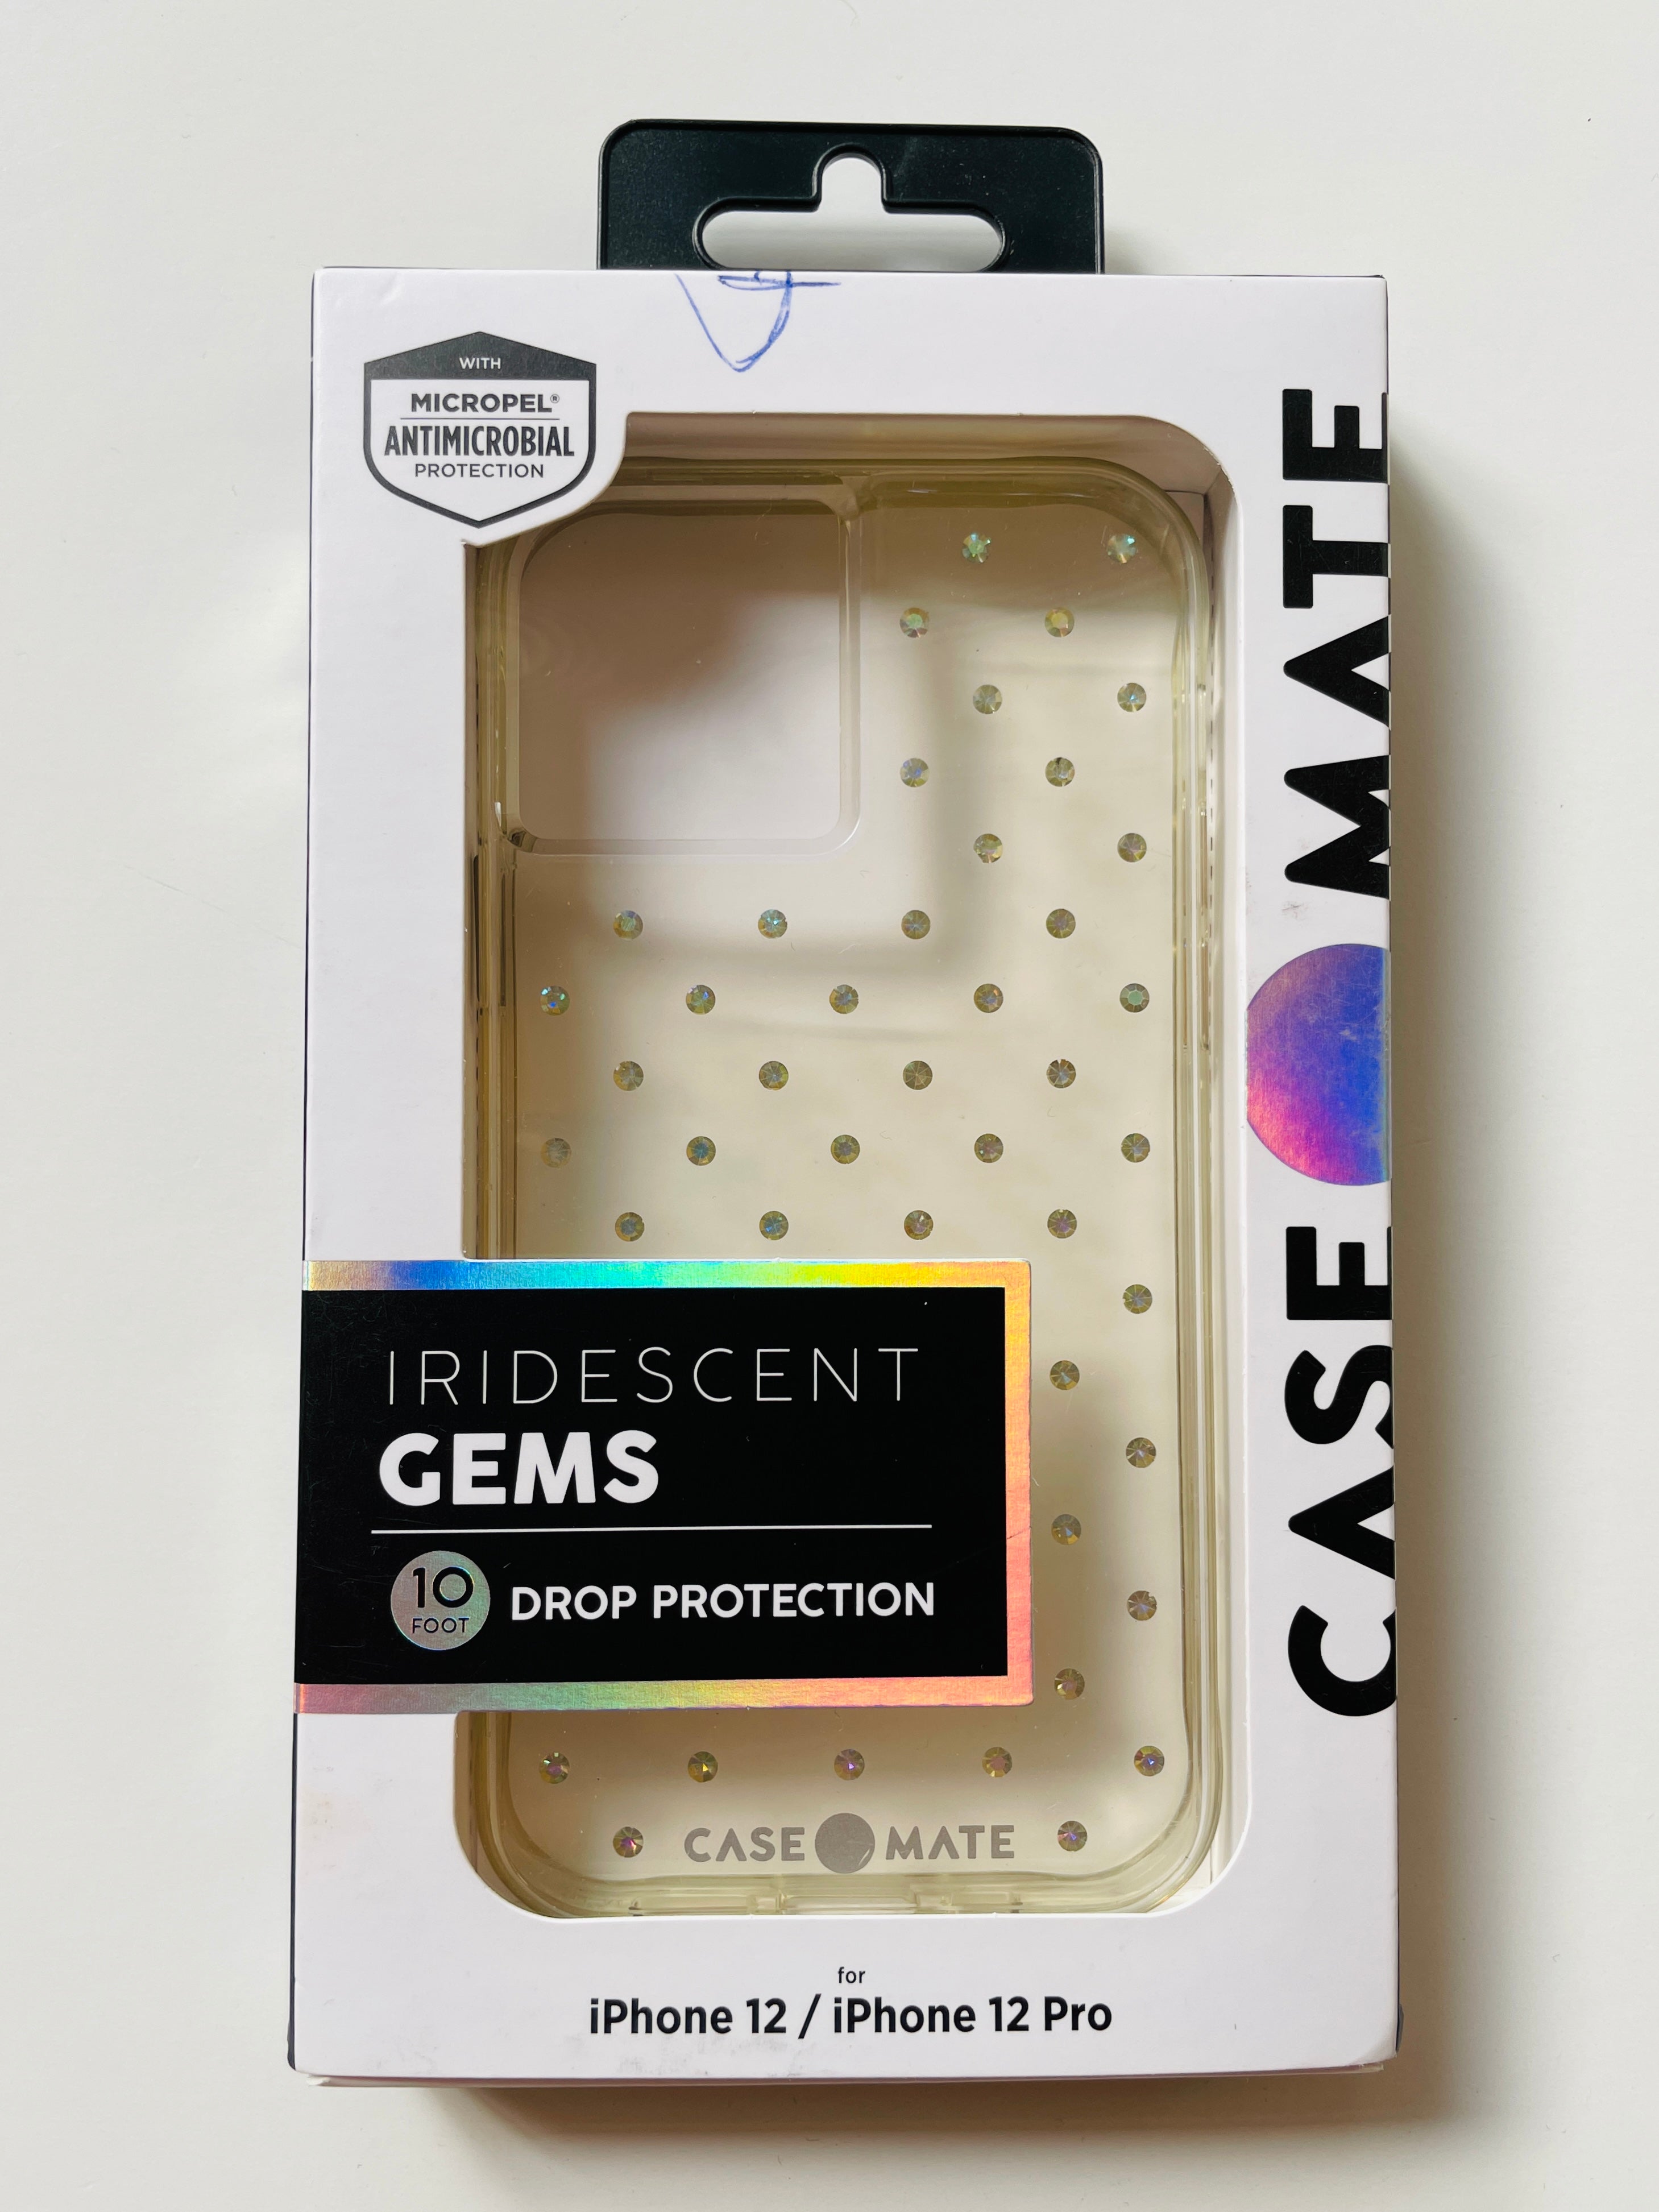 Case Mate Iridescent Gems